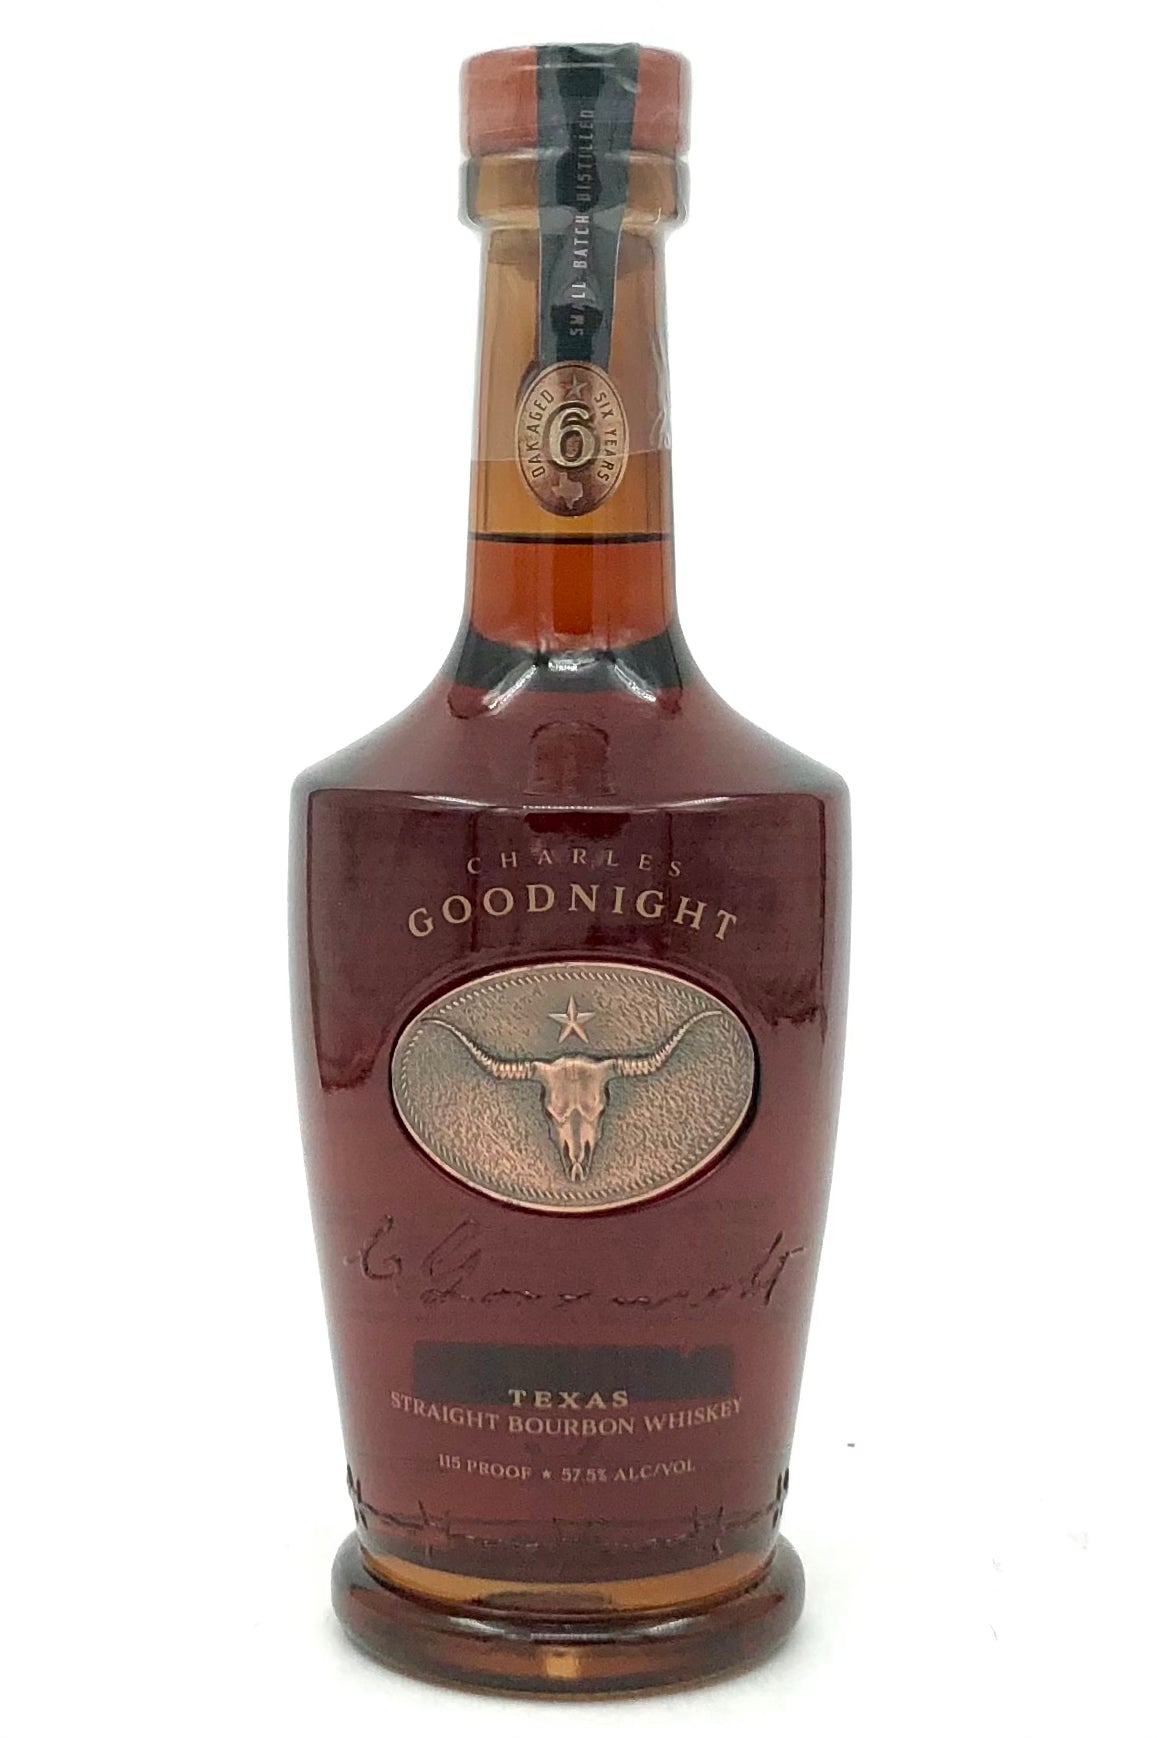 Charles Goodnight Texas Straight Bourbon Whiskey 115 Proof